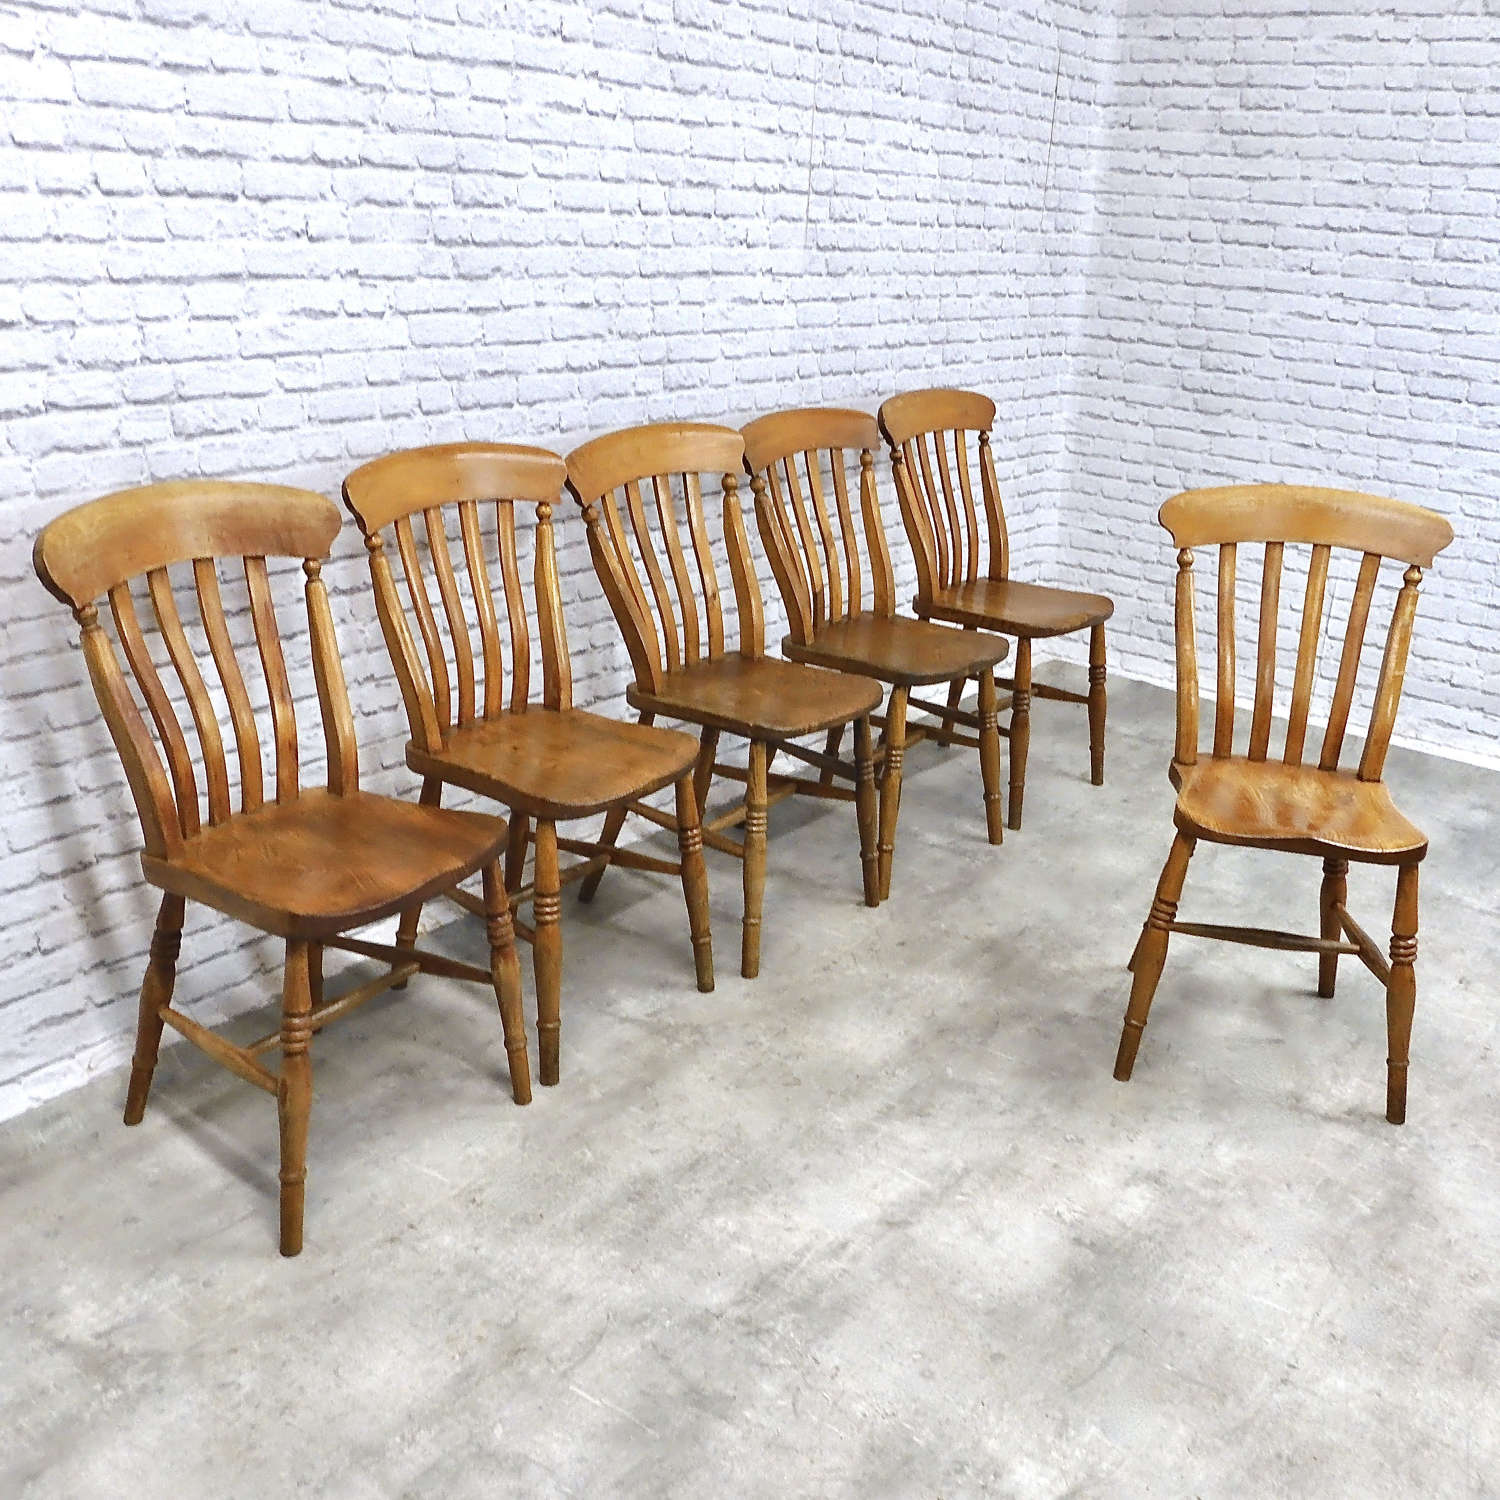 6x Farmhouse Kitchen Chairs